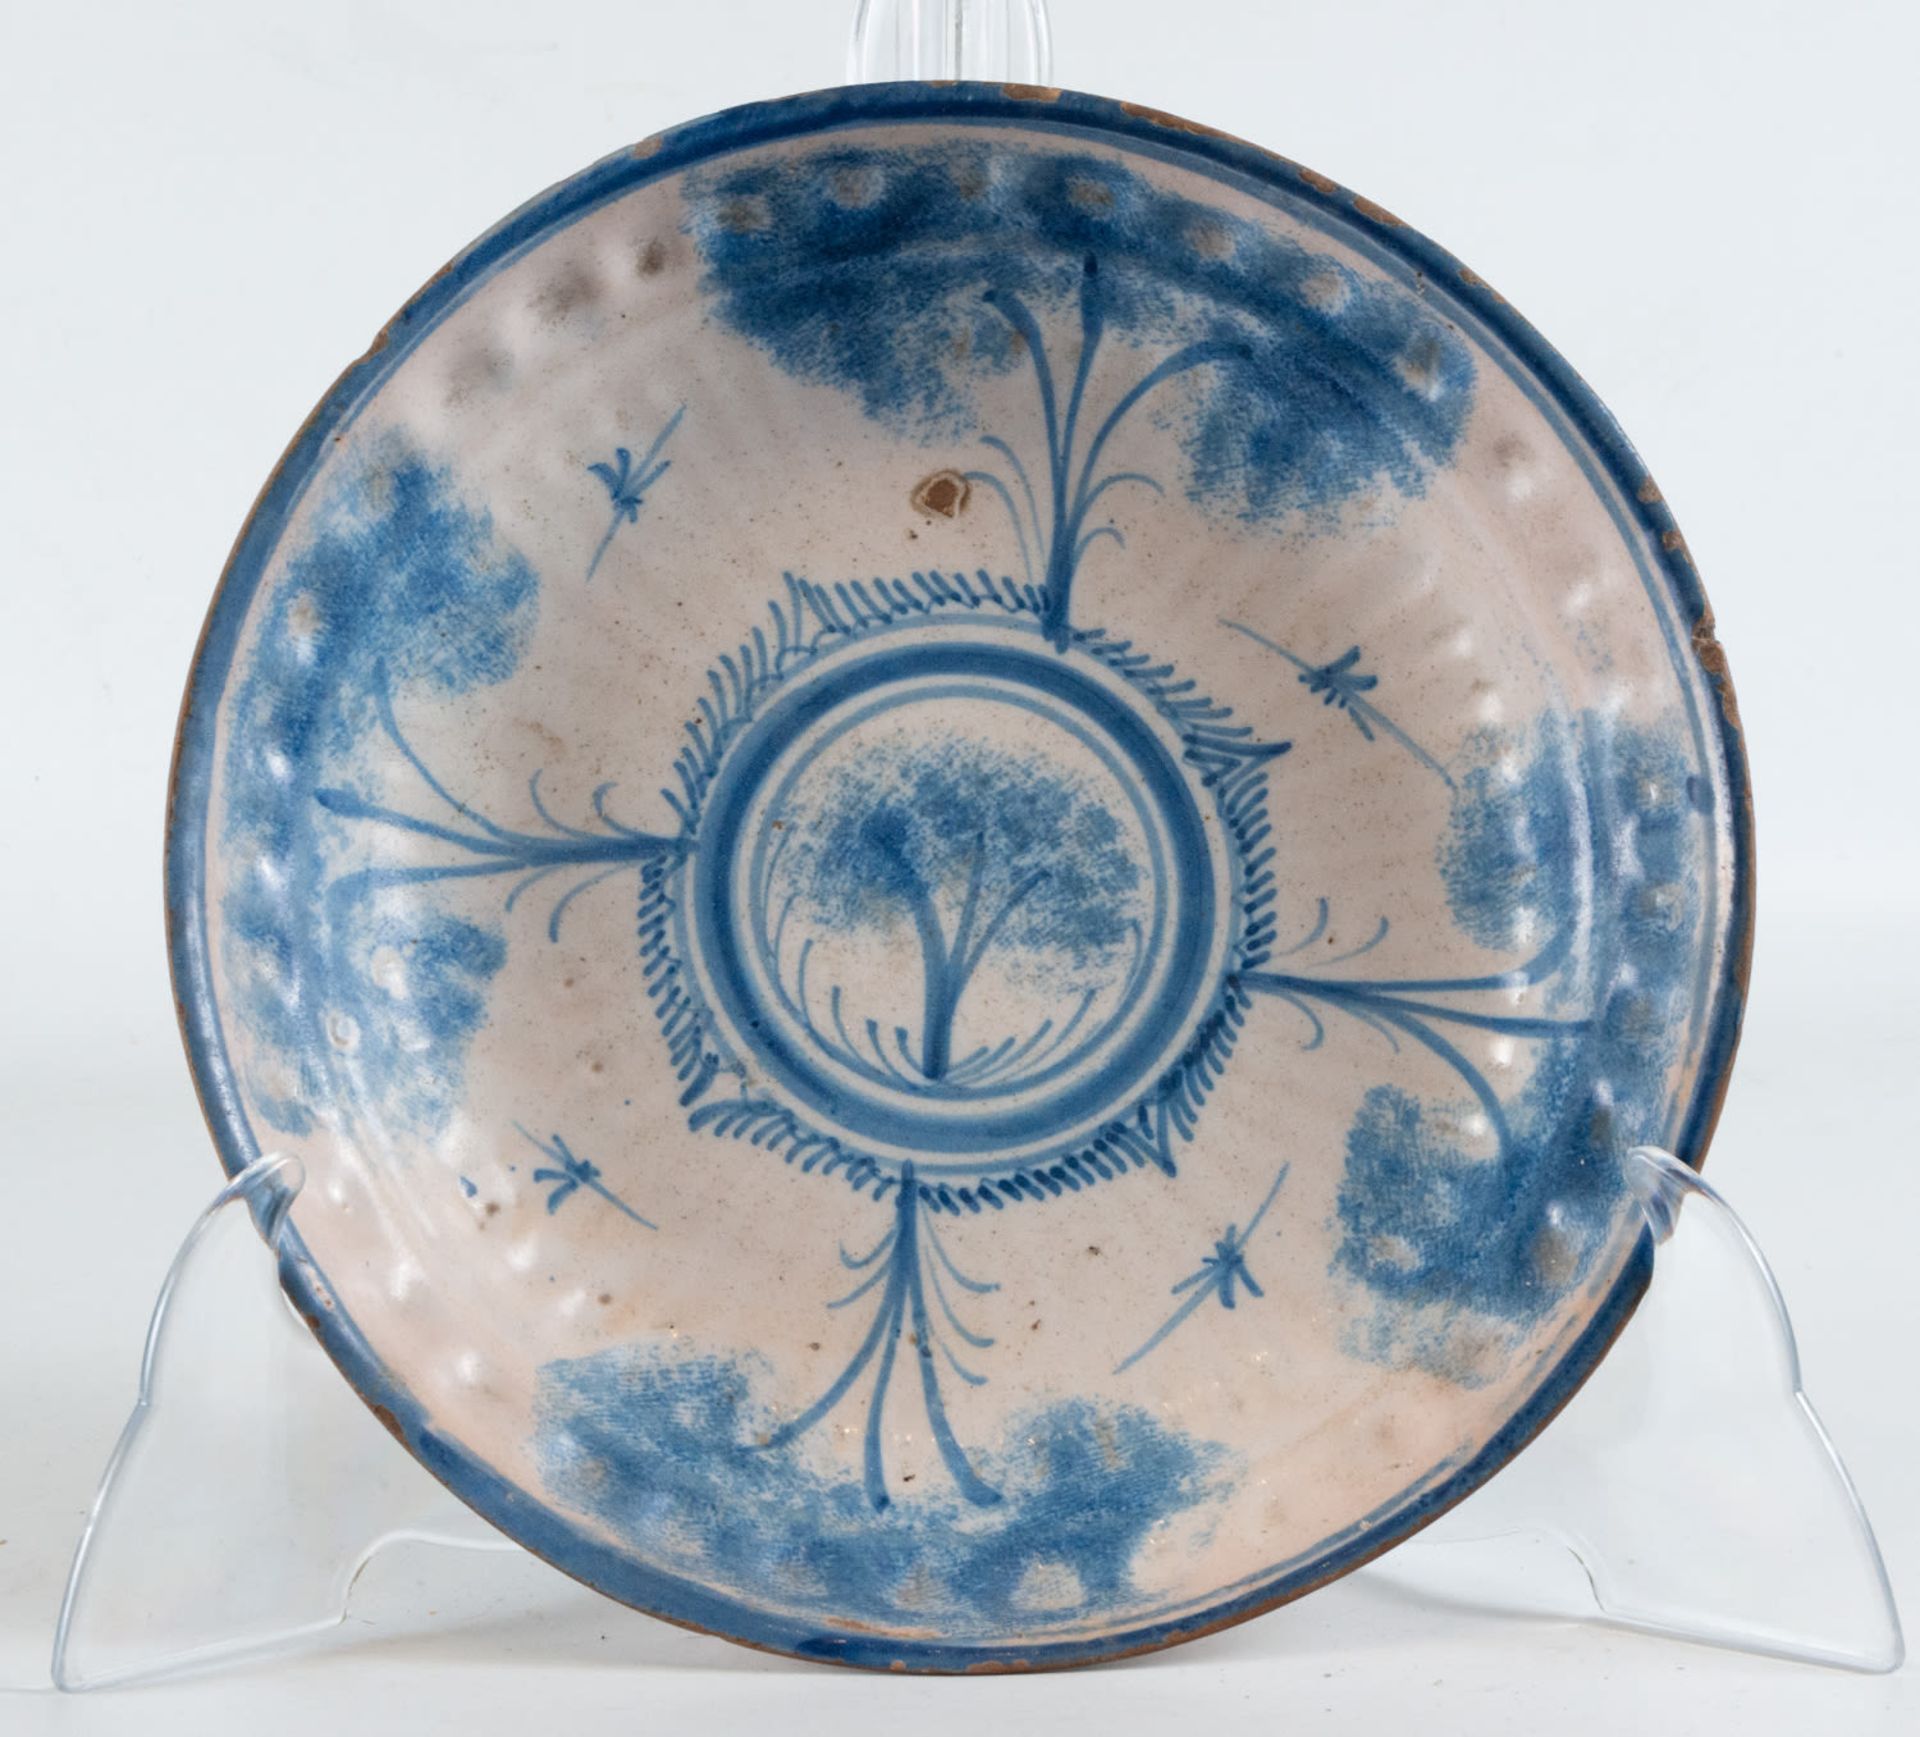 Ceramic plate from Manises, 19th century